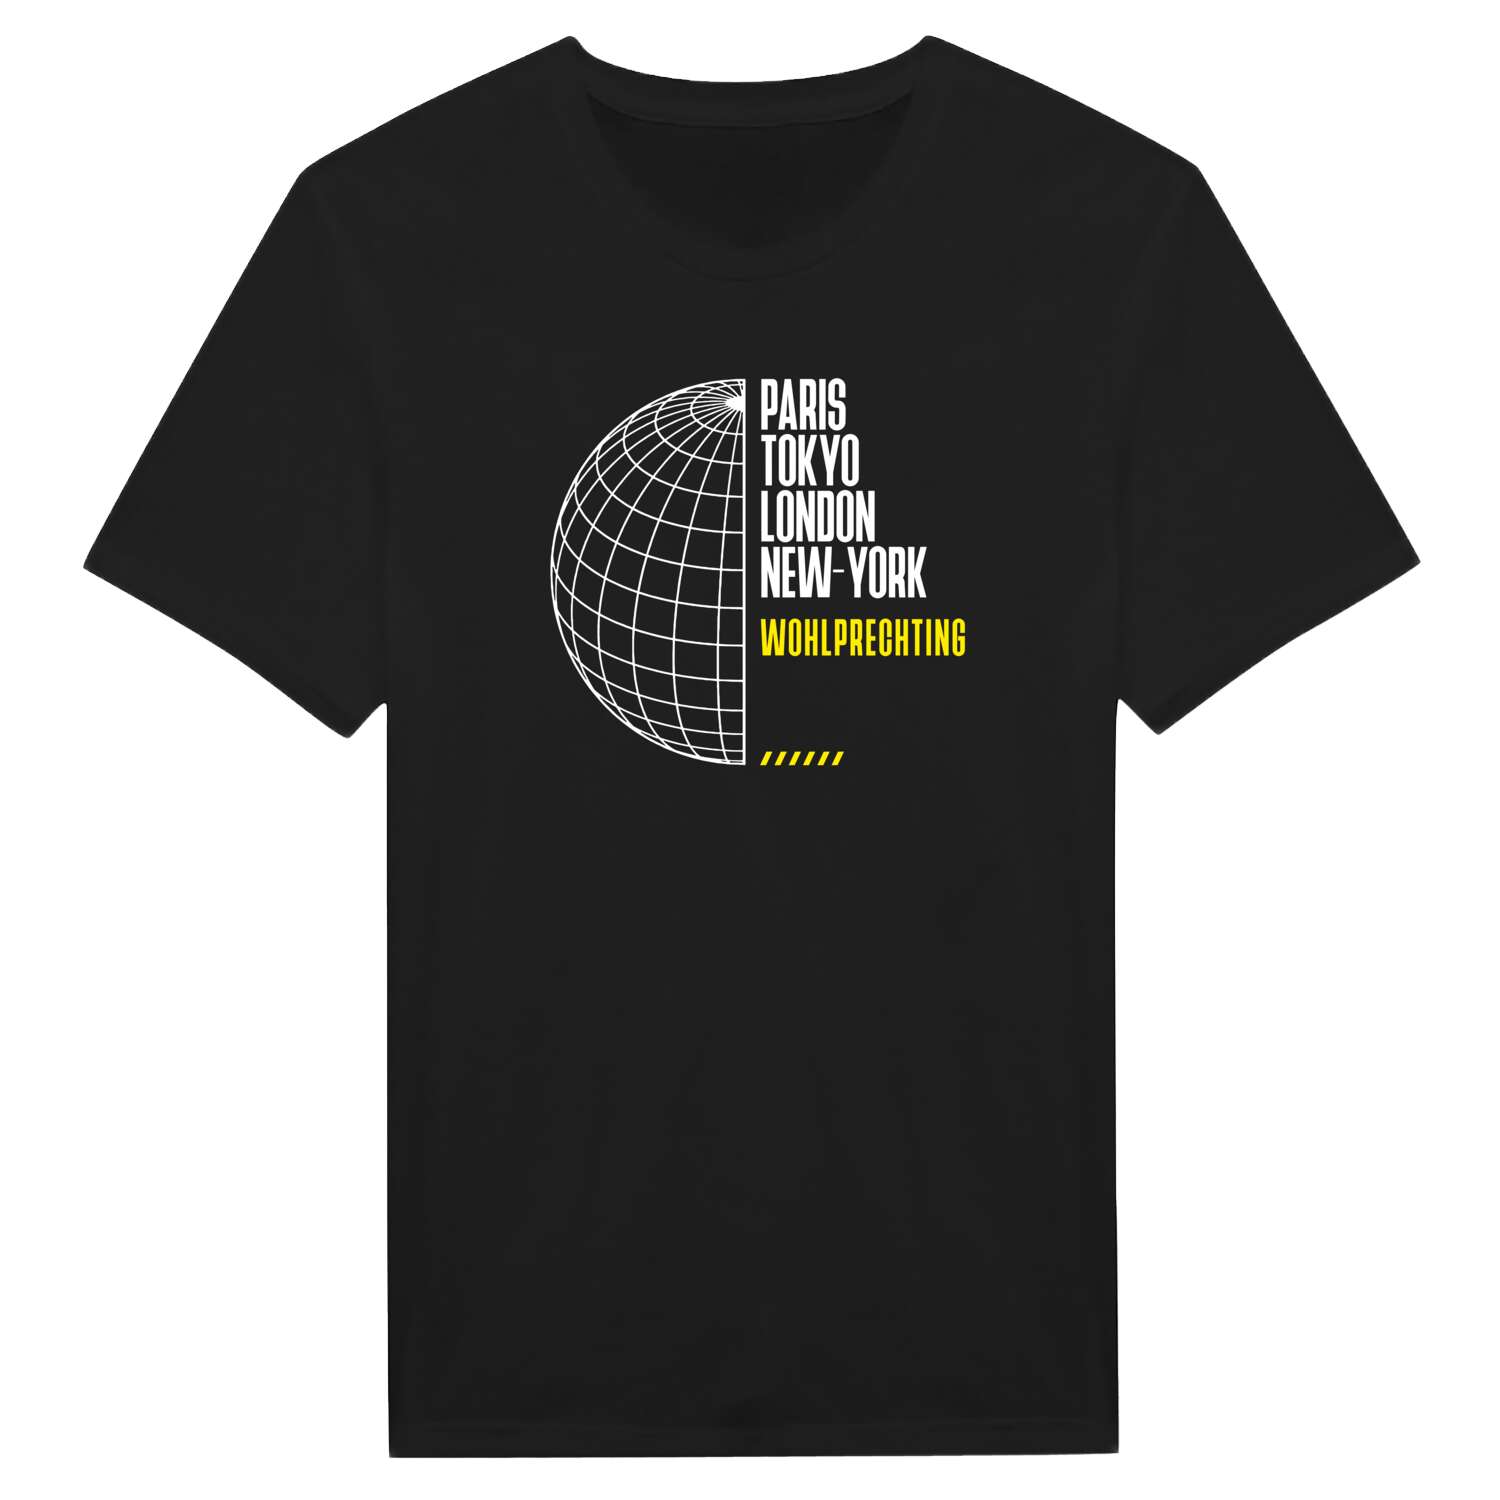 Wohlprechting T-Shirt »Paris Tokyo London«